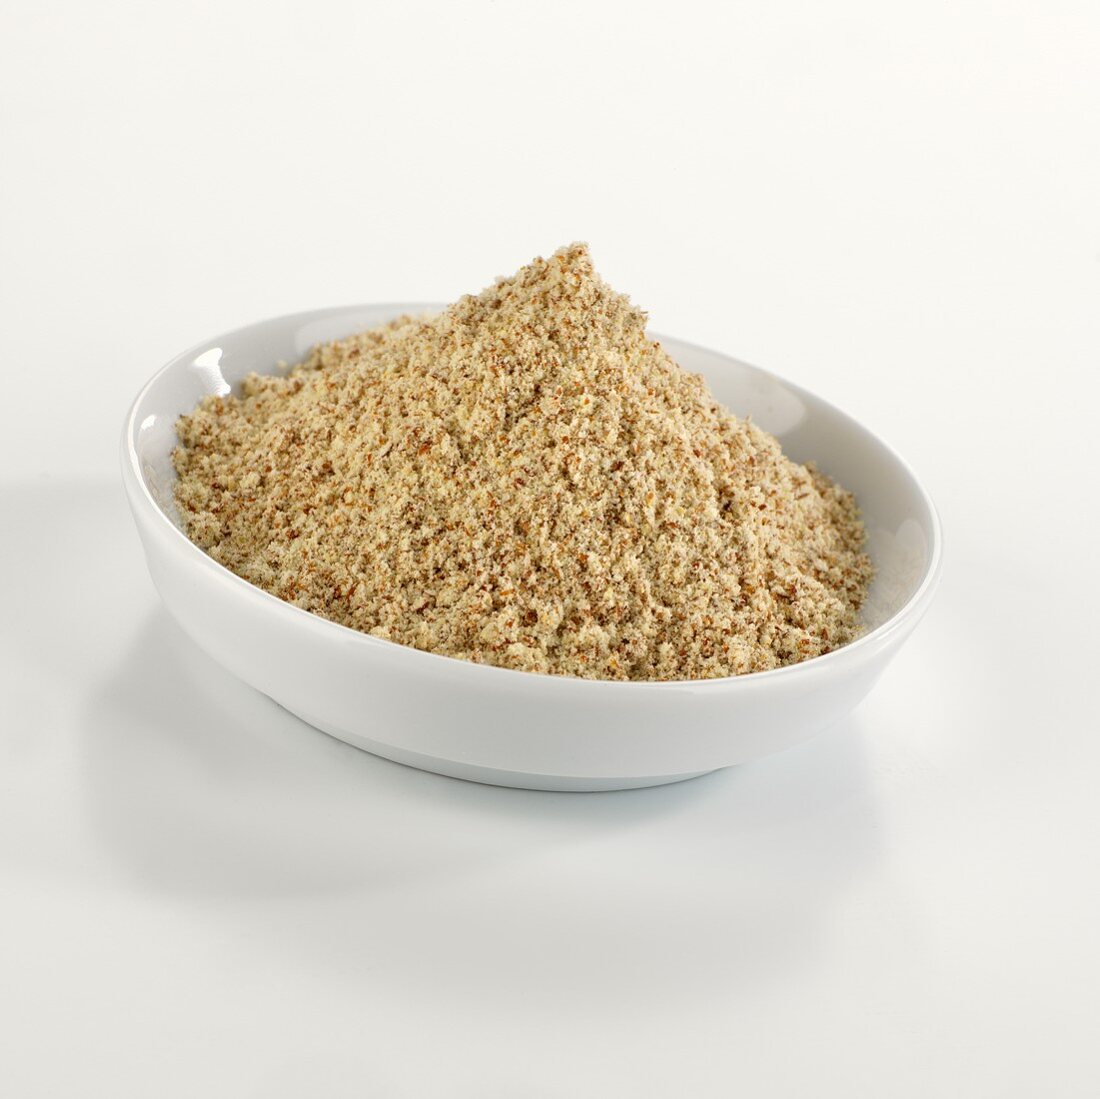 A heap of organic brown millet (gluten-free) in dish